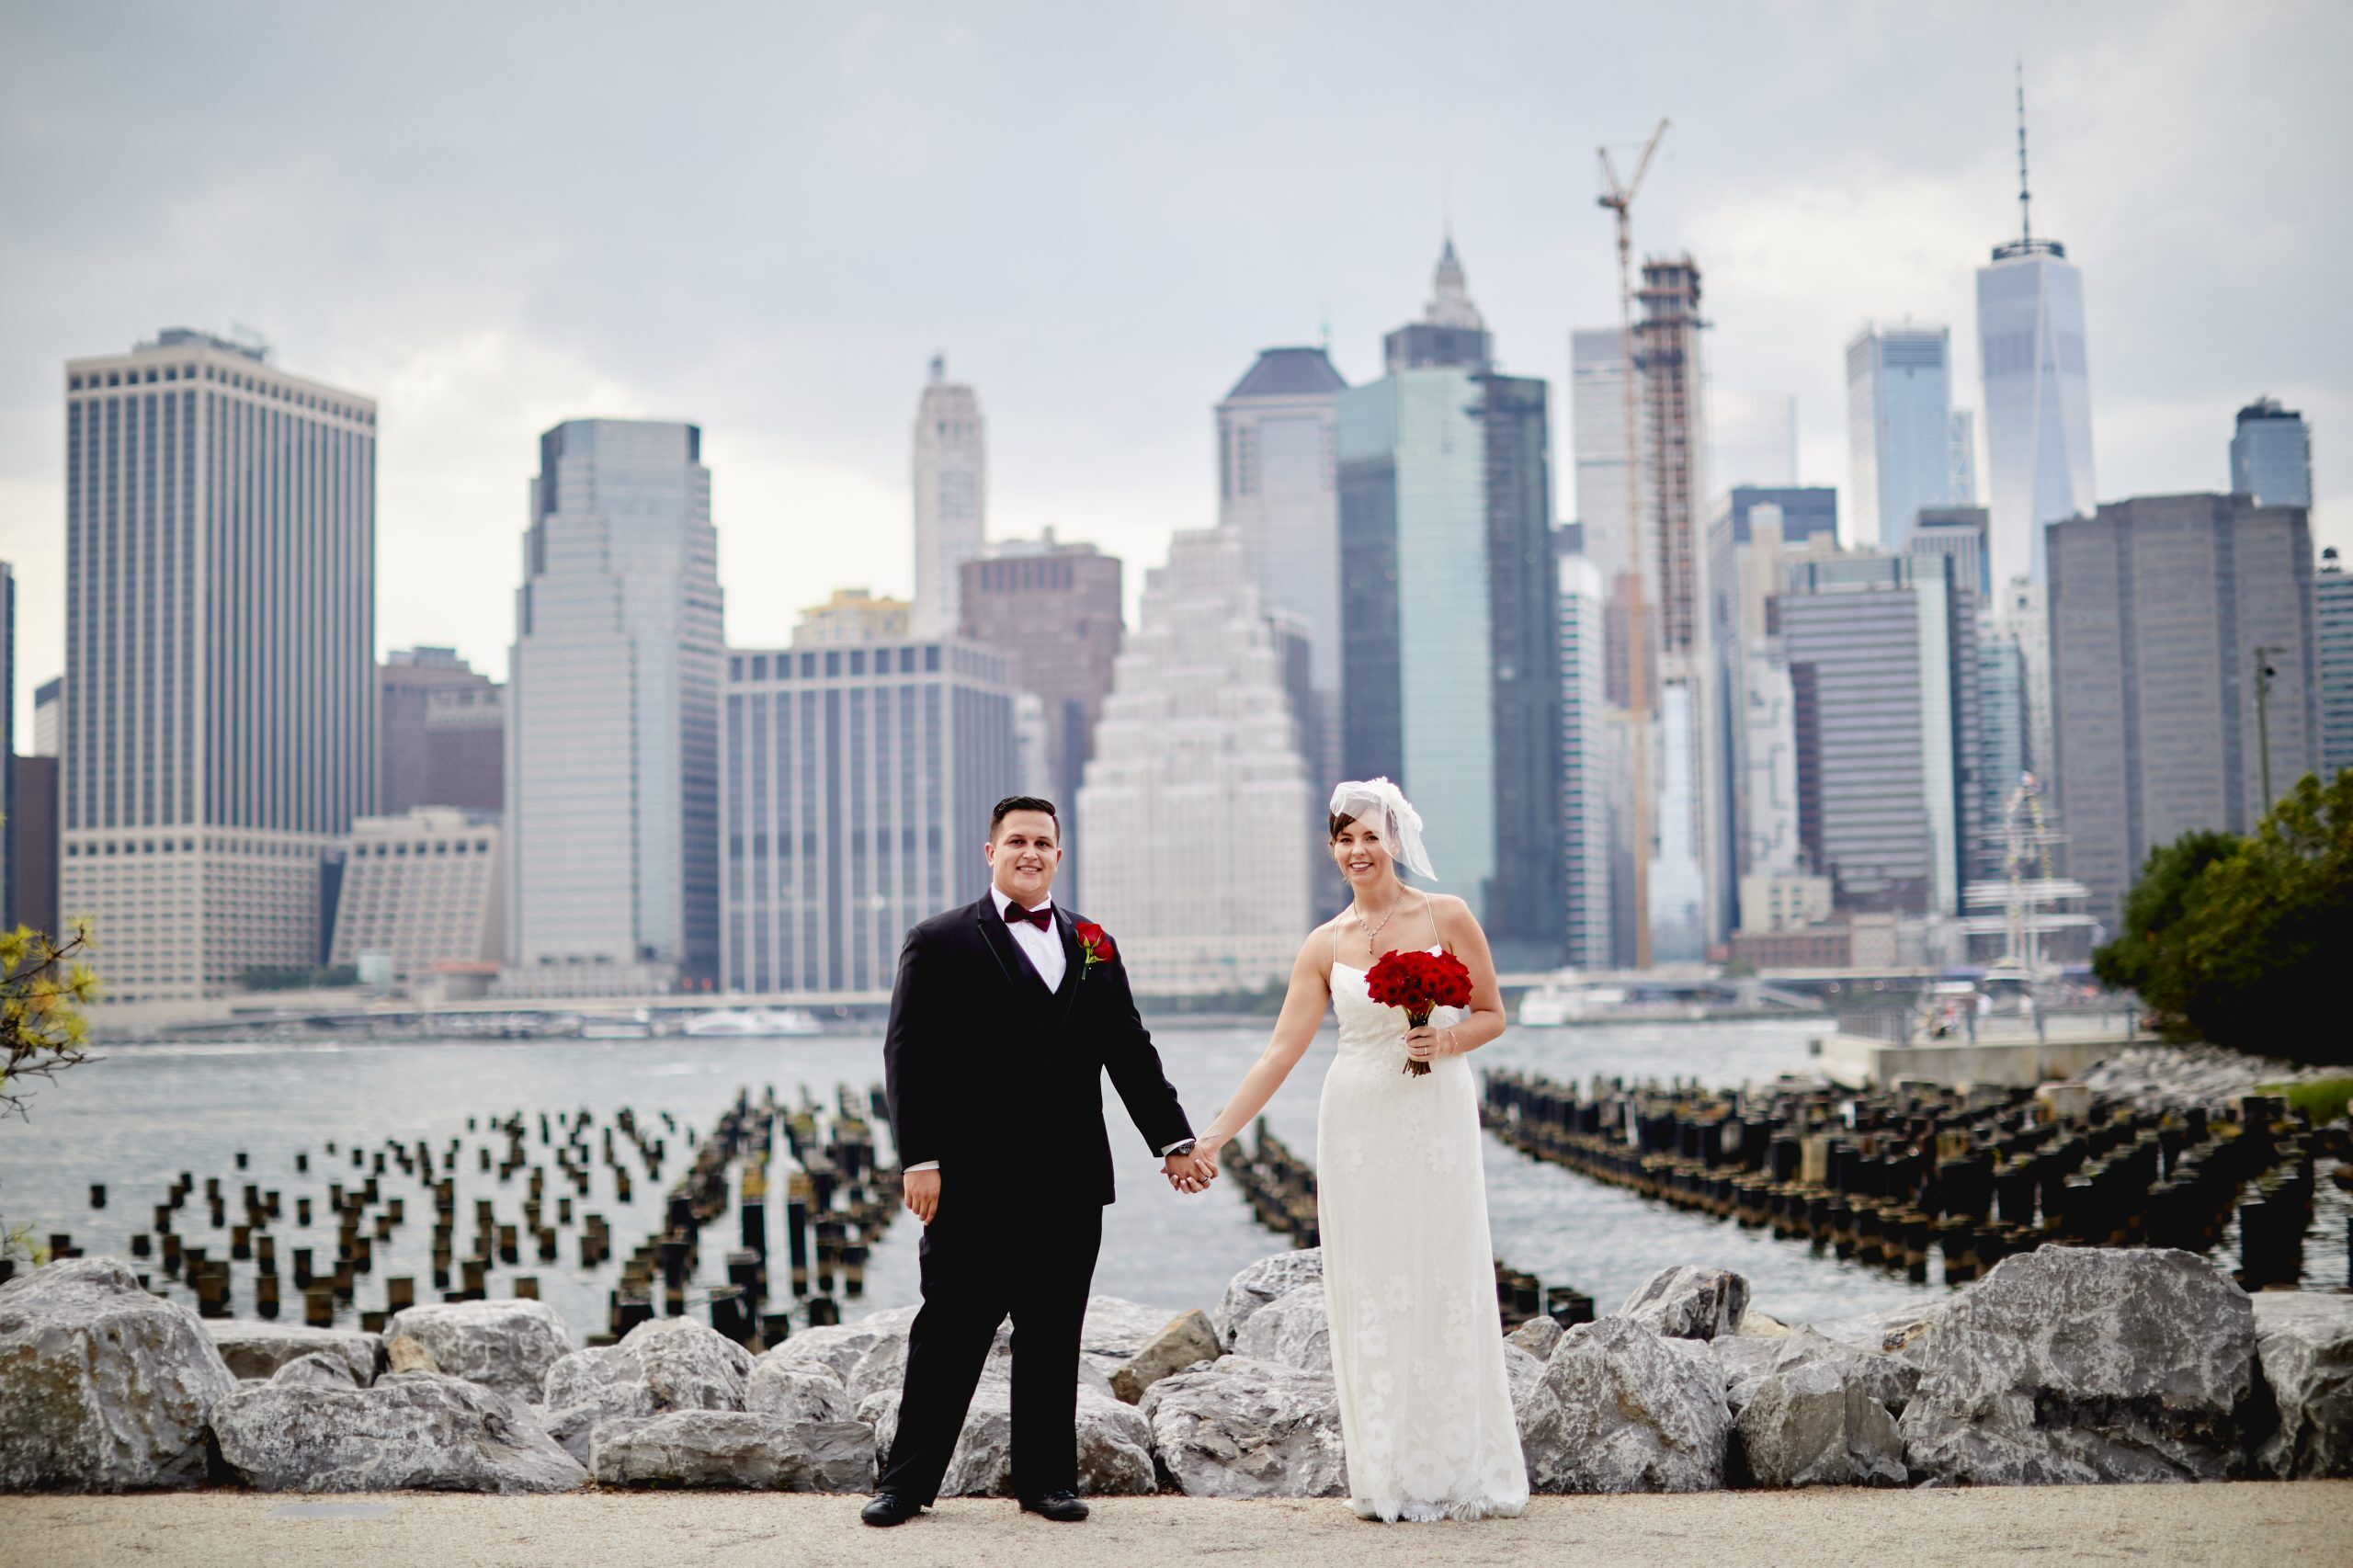 Brooklyn Bridge Park, elopement venue in New York City